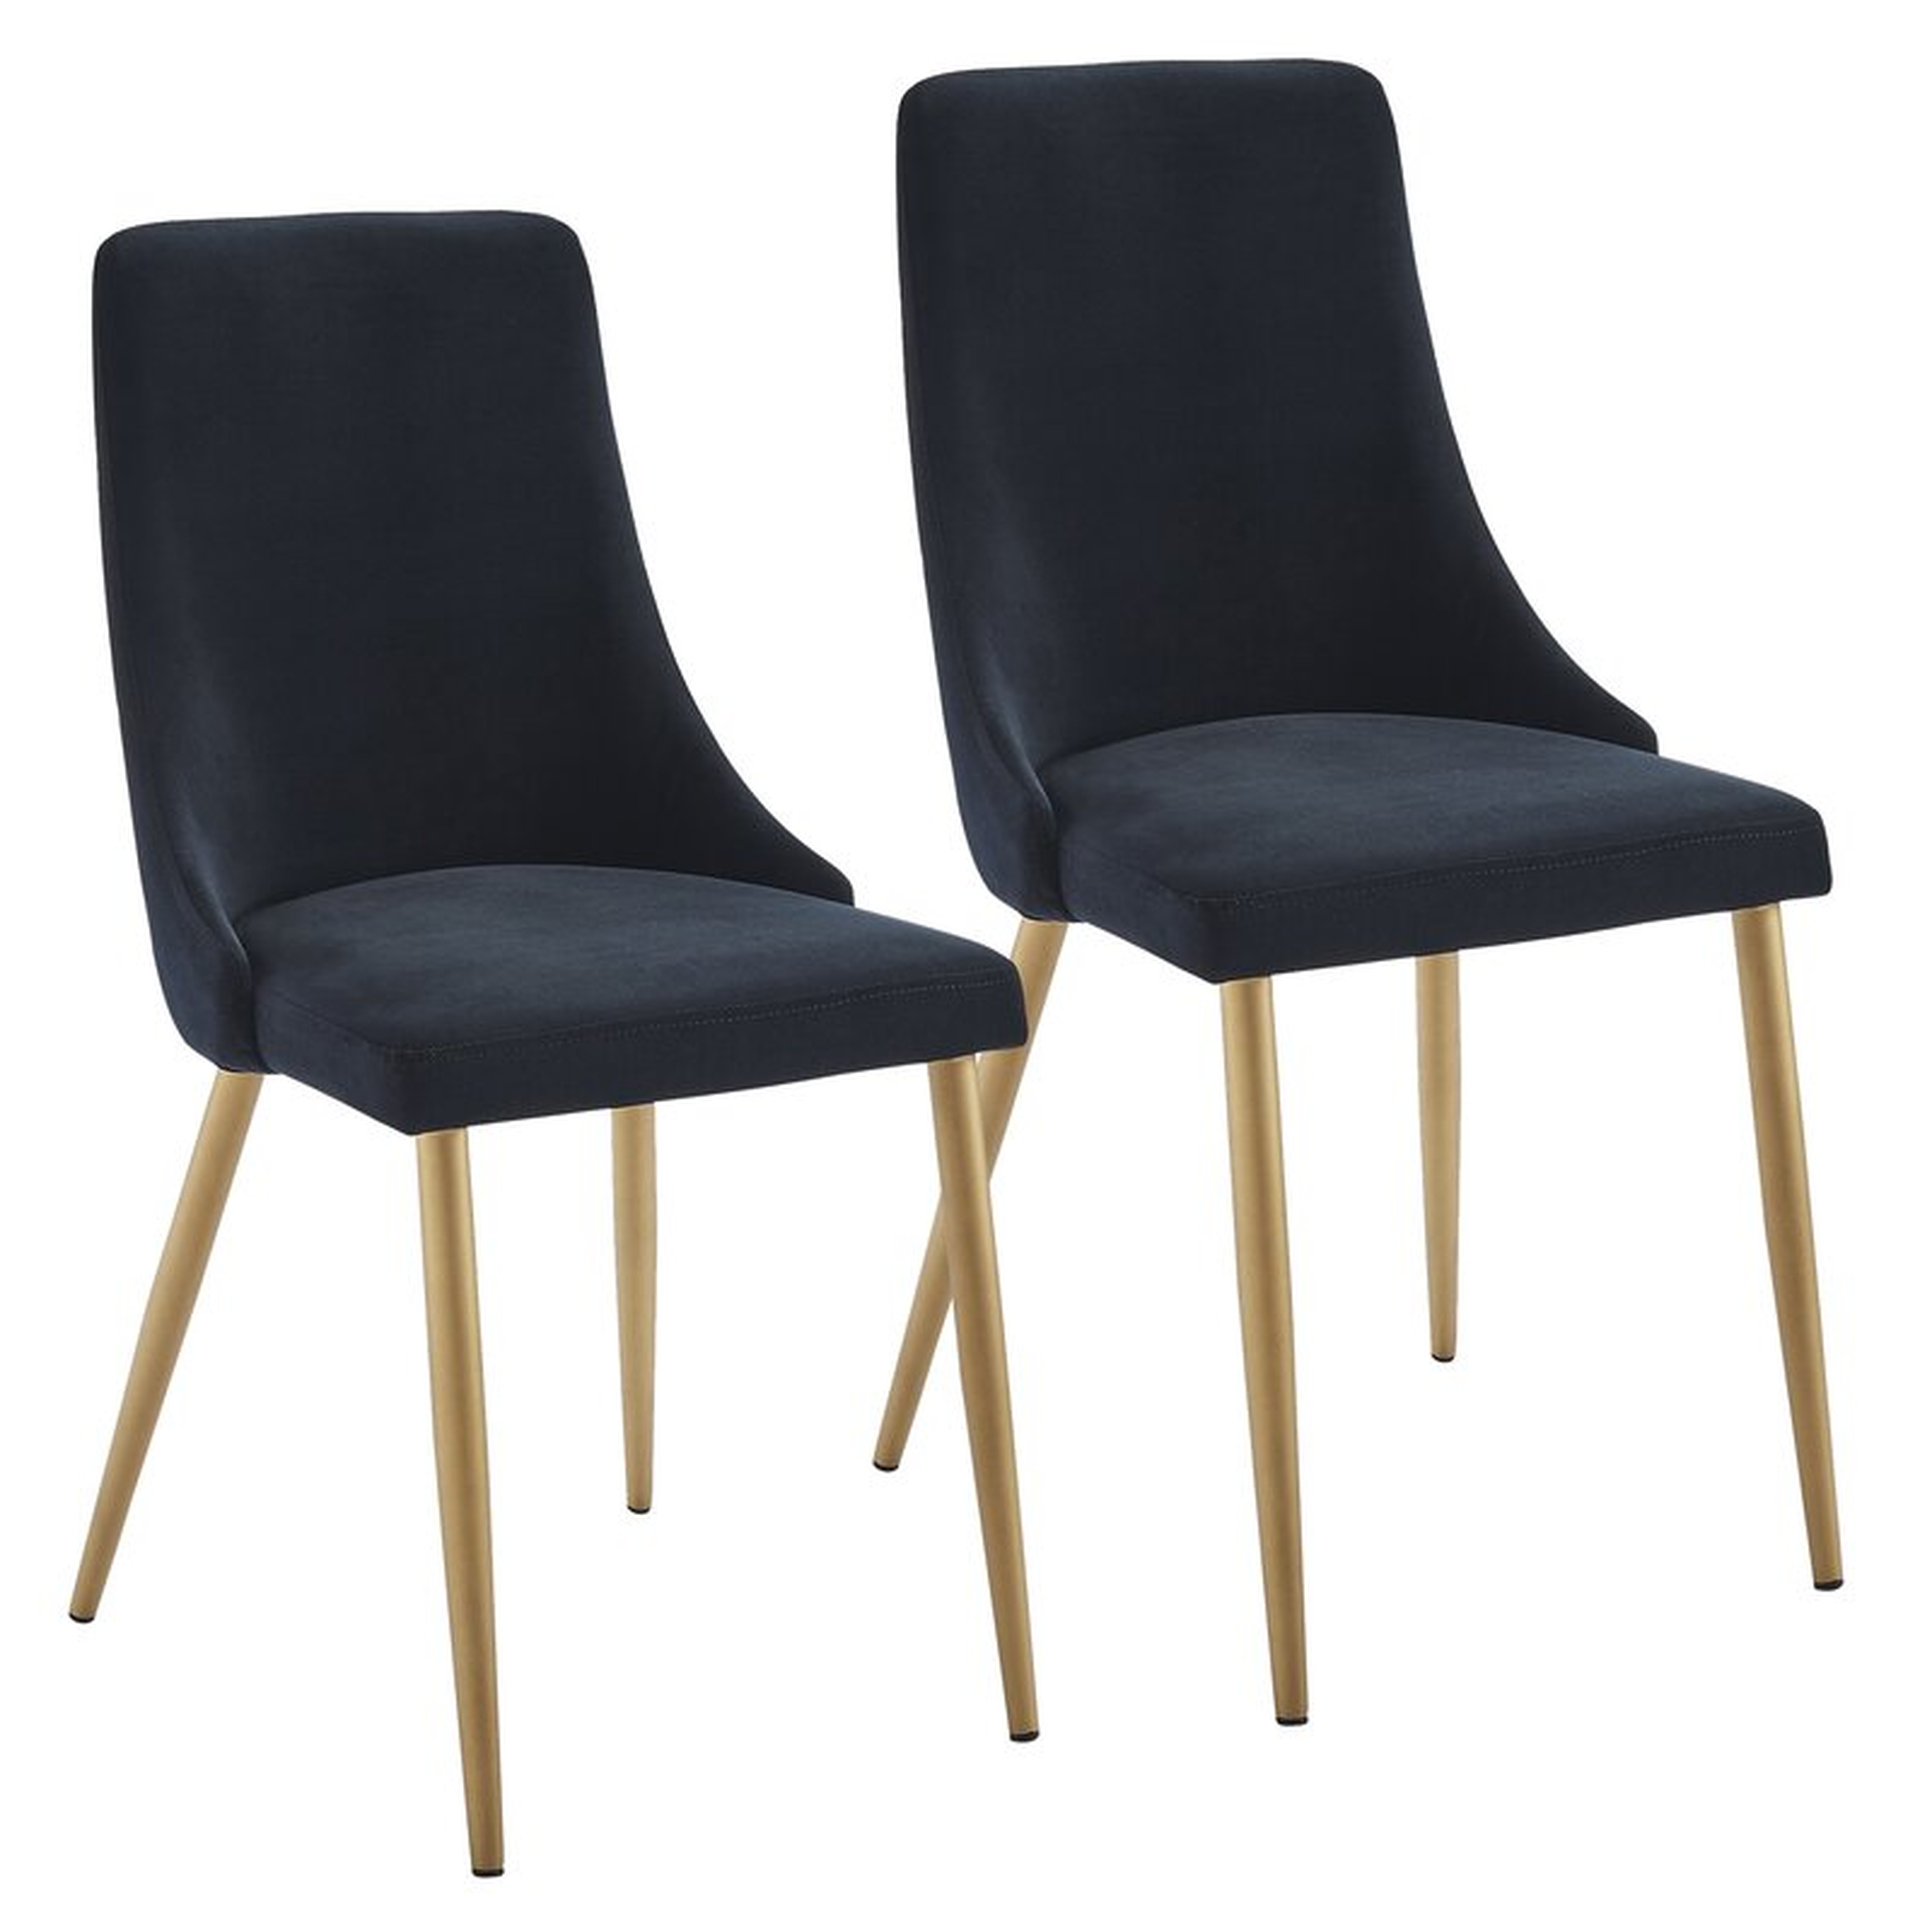 Neace Upholstered Dining Chair - Wayfair